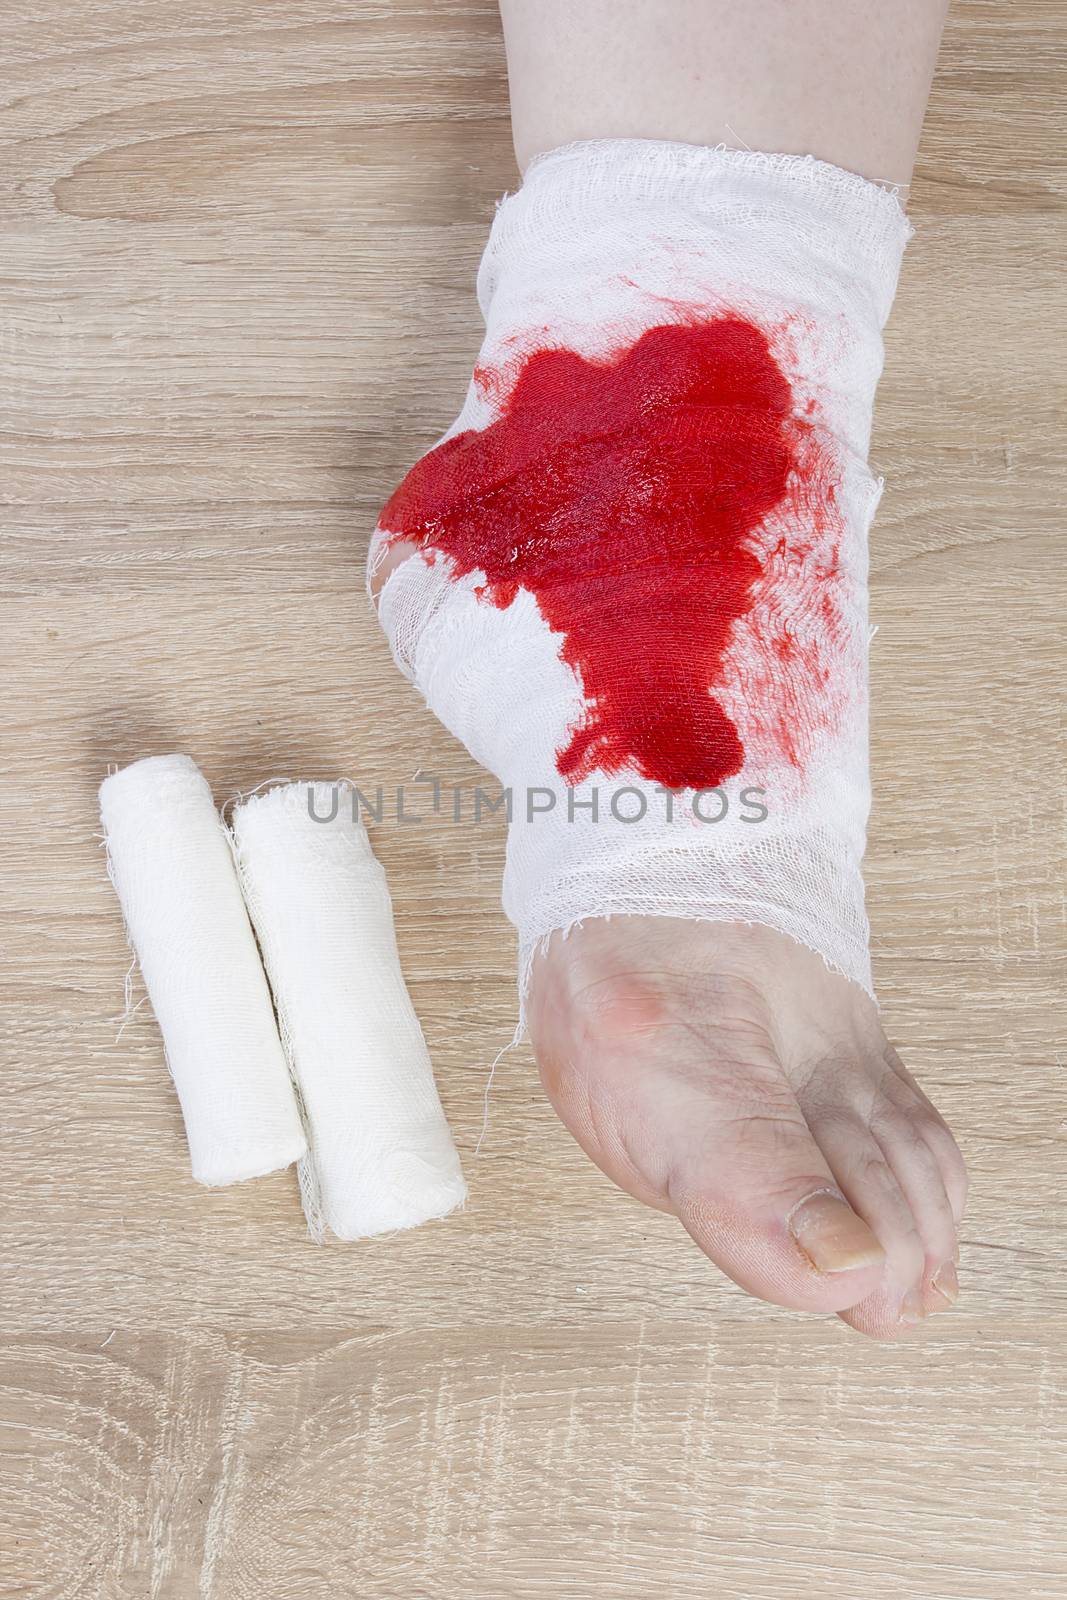 White medicine bandage on human injury foot